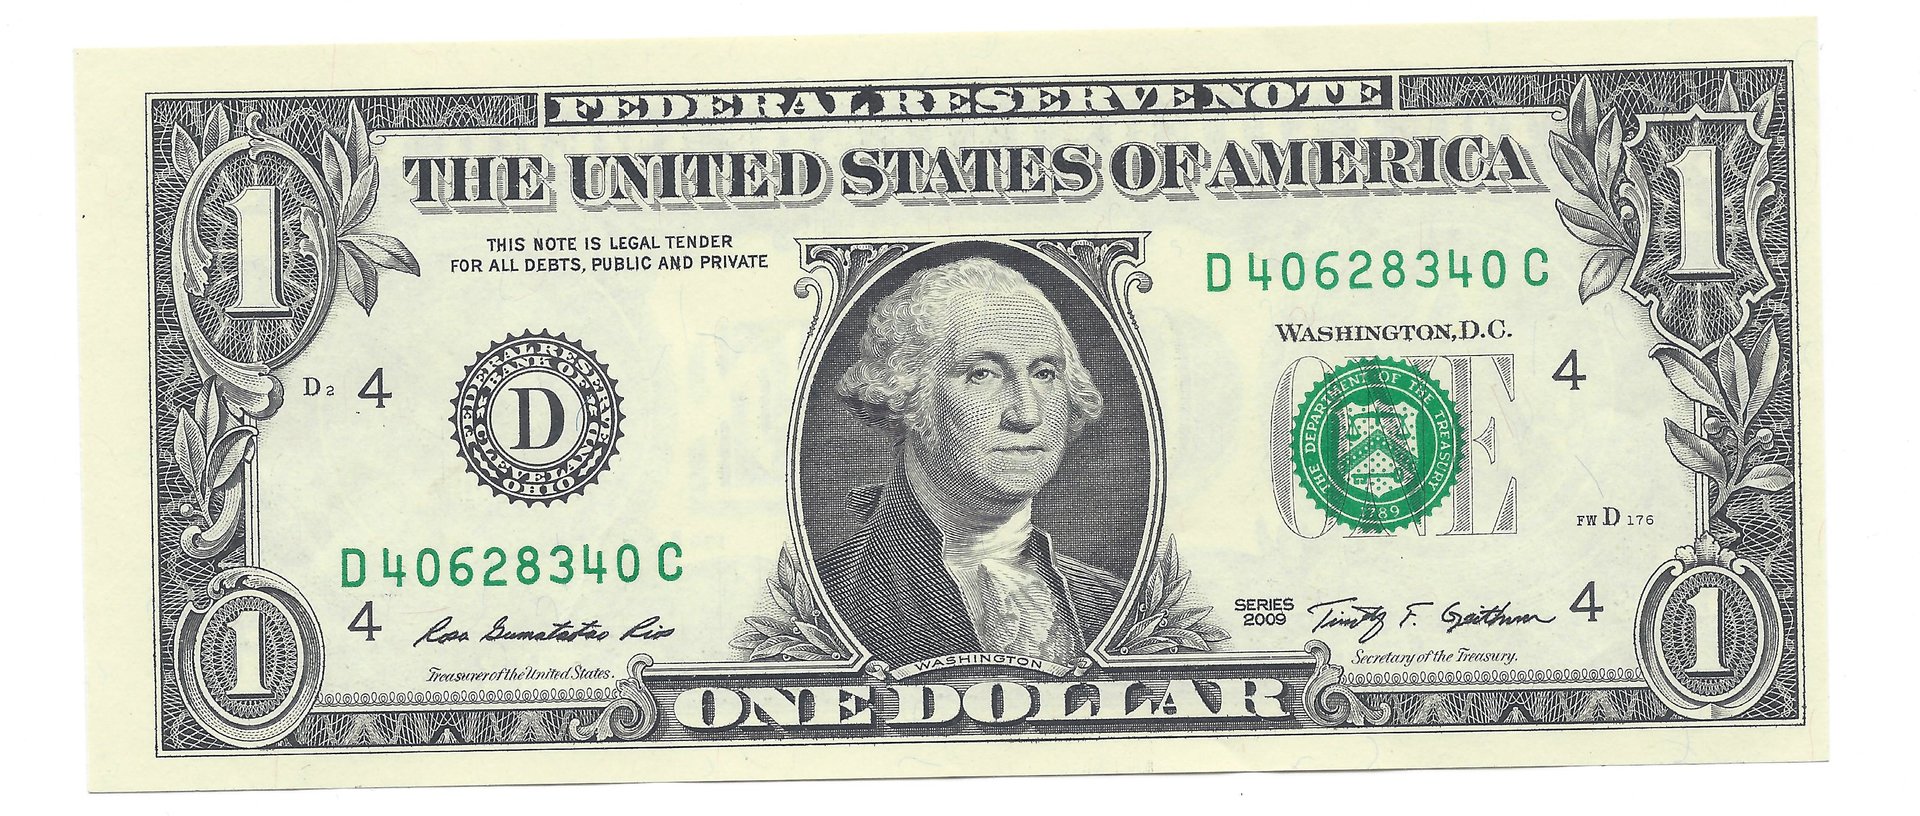 2009 federal reserve note.jpg